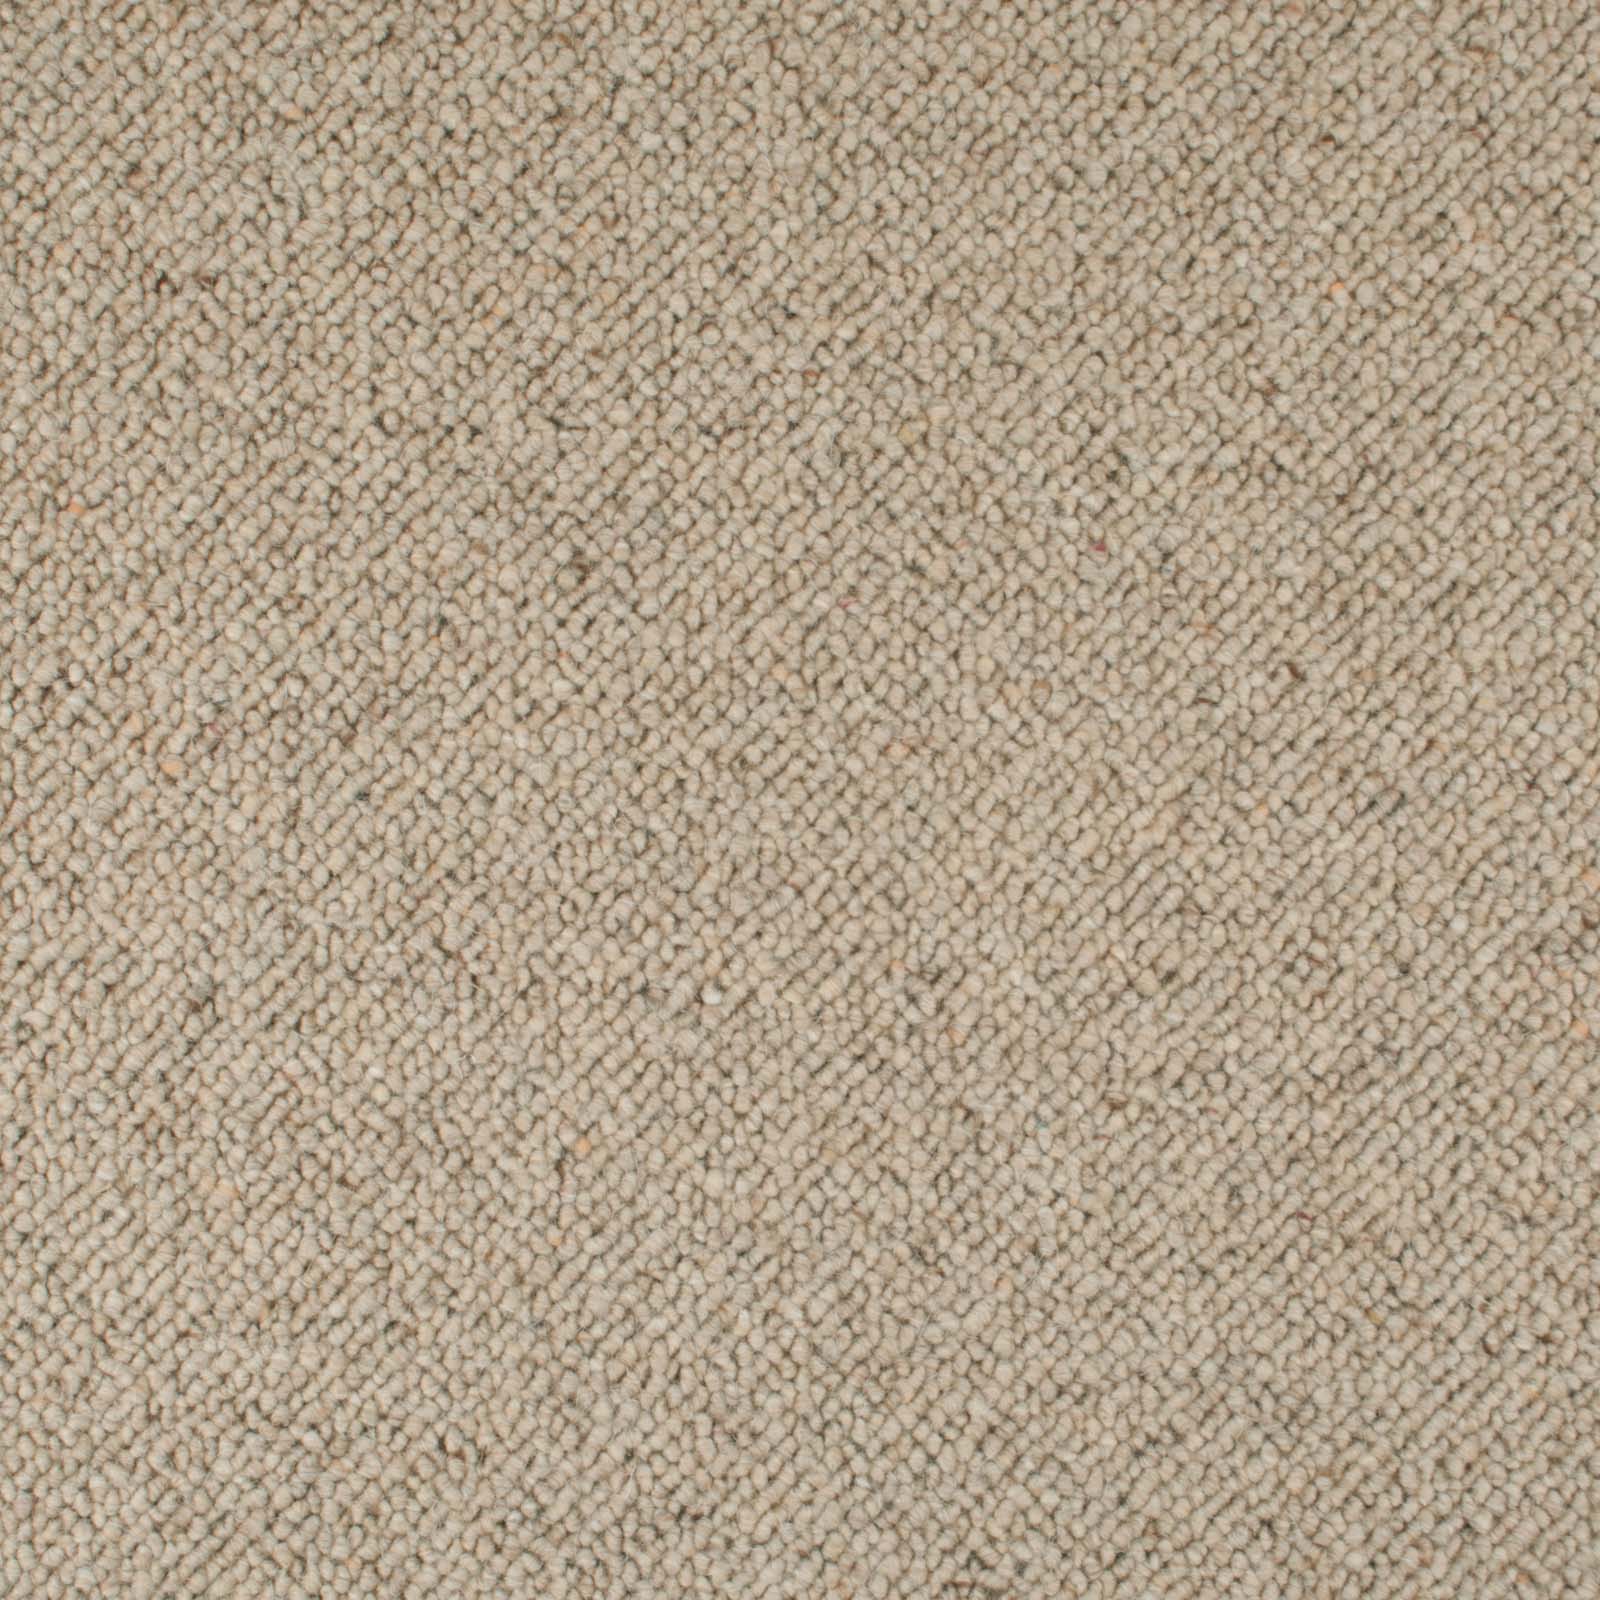 Beige Corsa Berber Deluxe Wool Carpet - Far